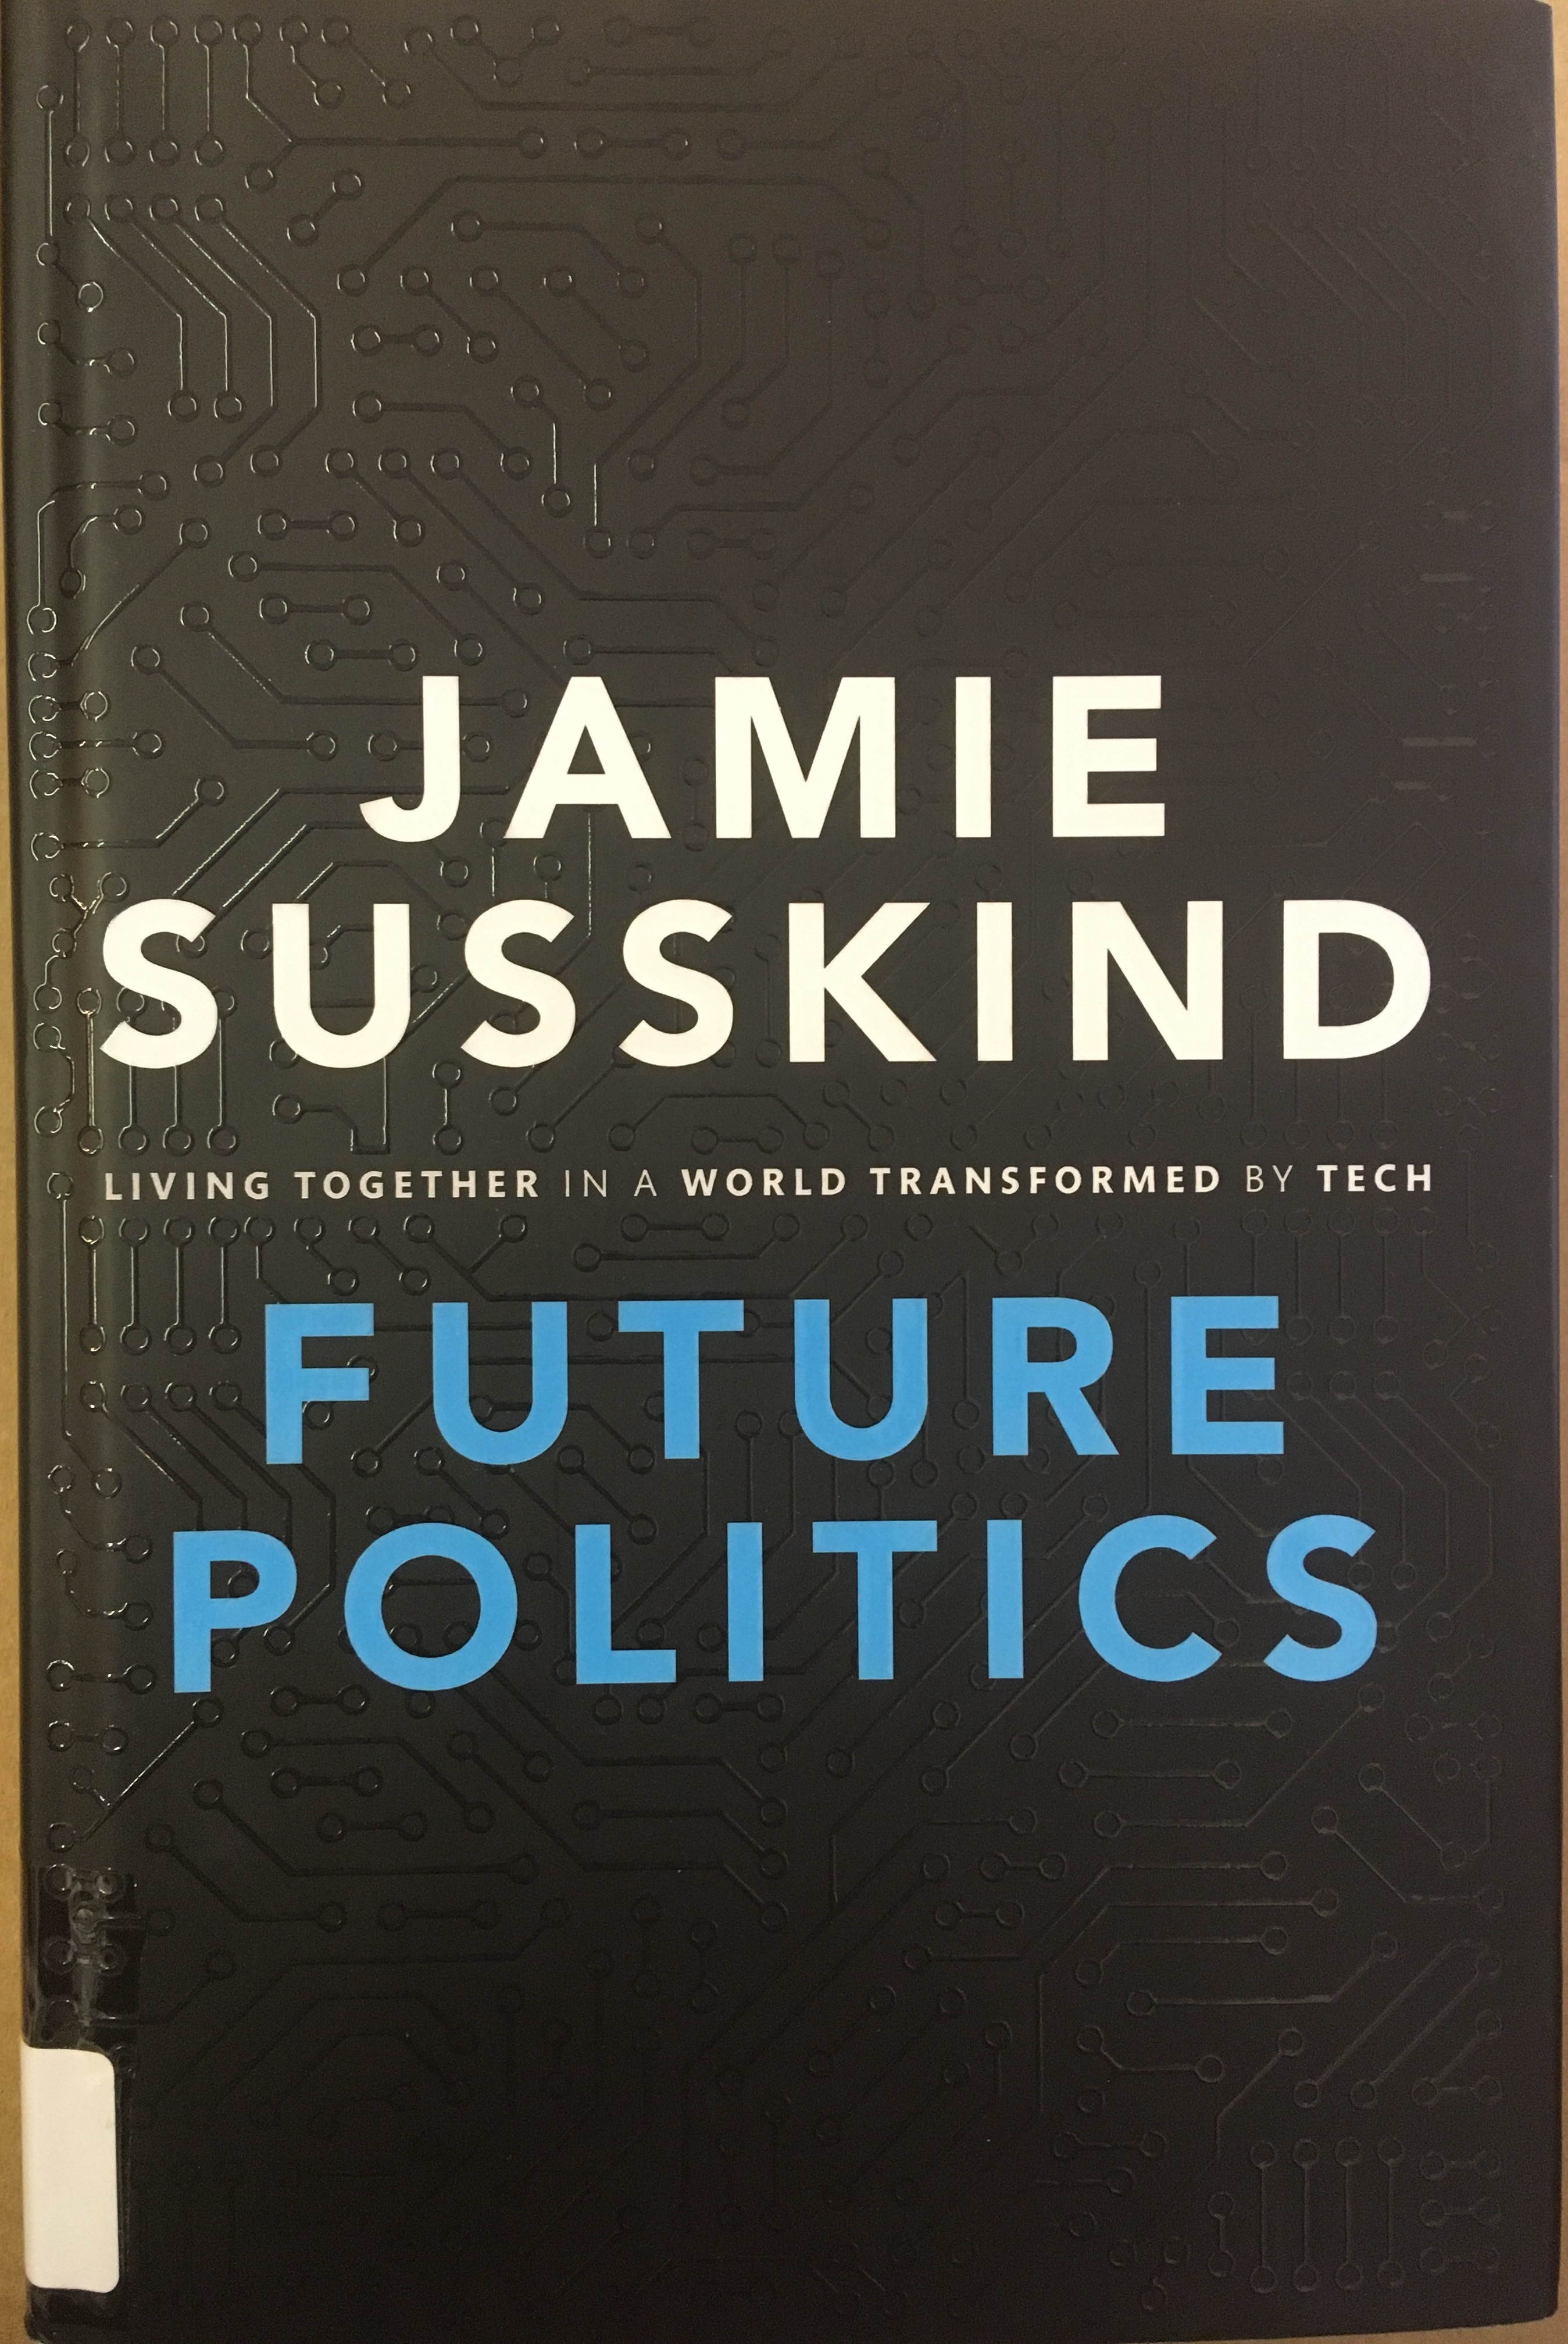 Jamie Susskind Future Politics, Living Together in a World Transformed by Tech című könyvének borítója.